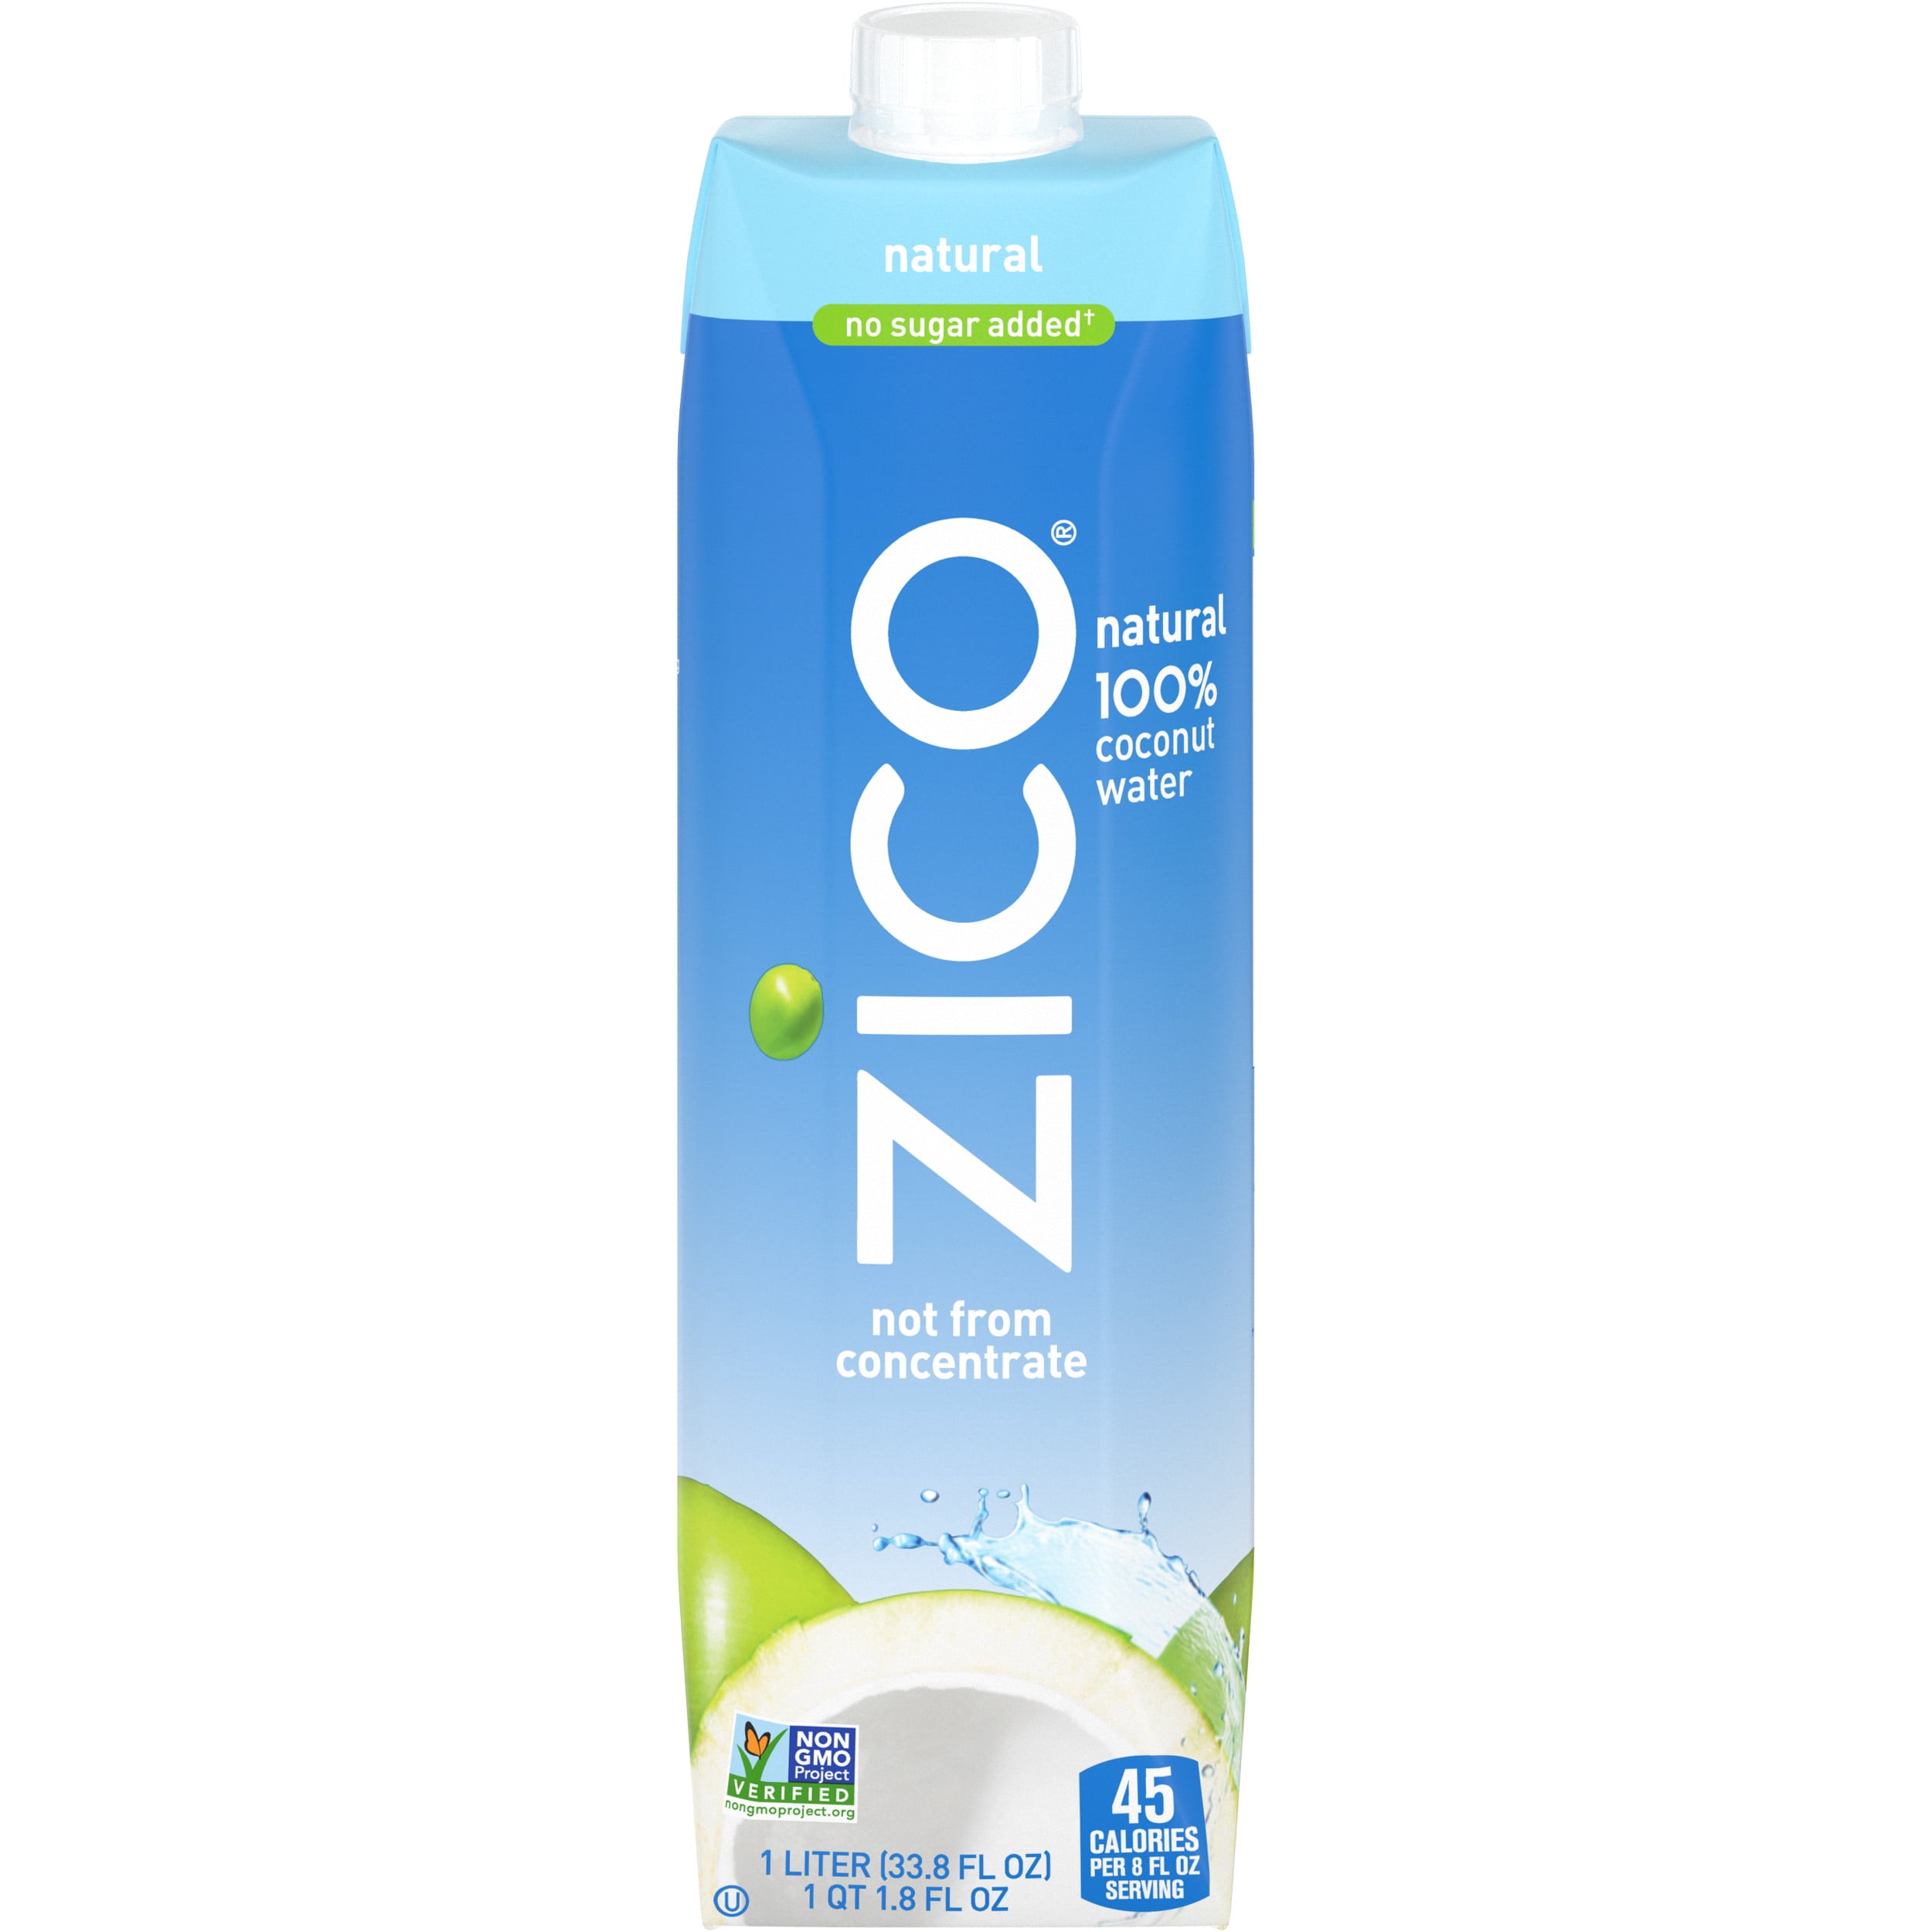 Zico 100% Coconut Water, No Sugar Added, 1 Liter